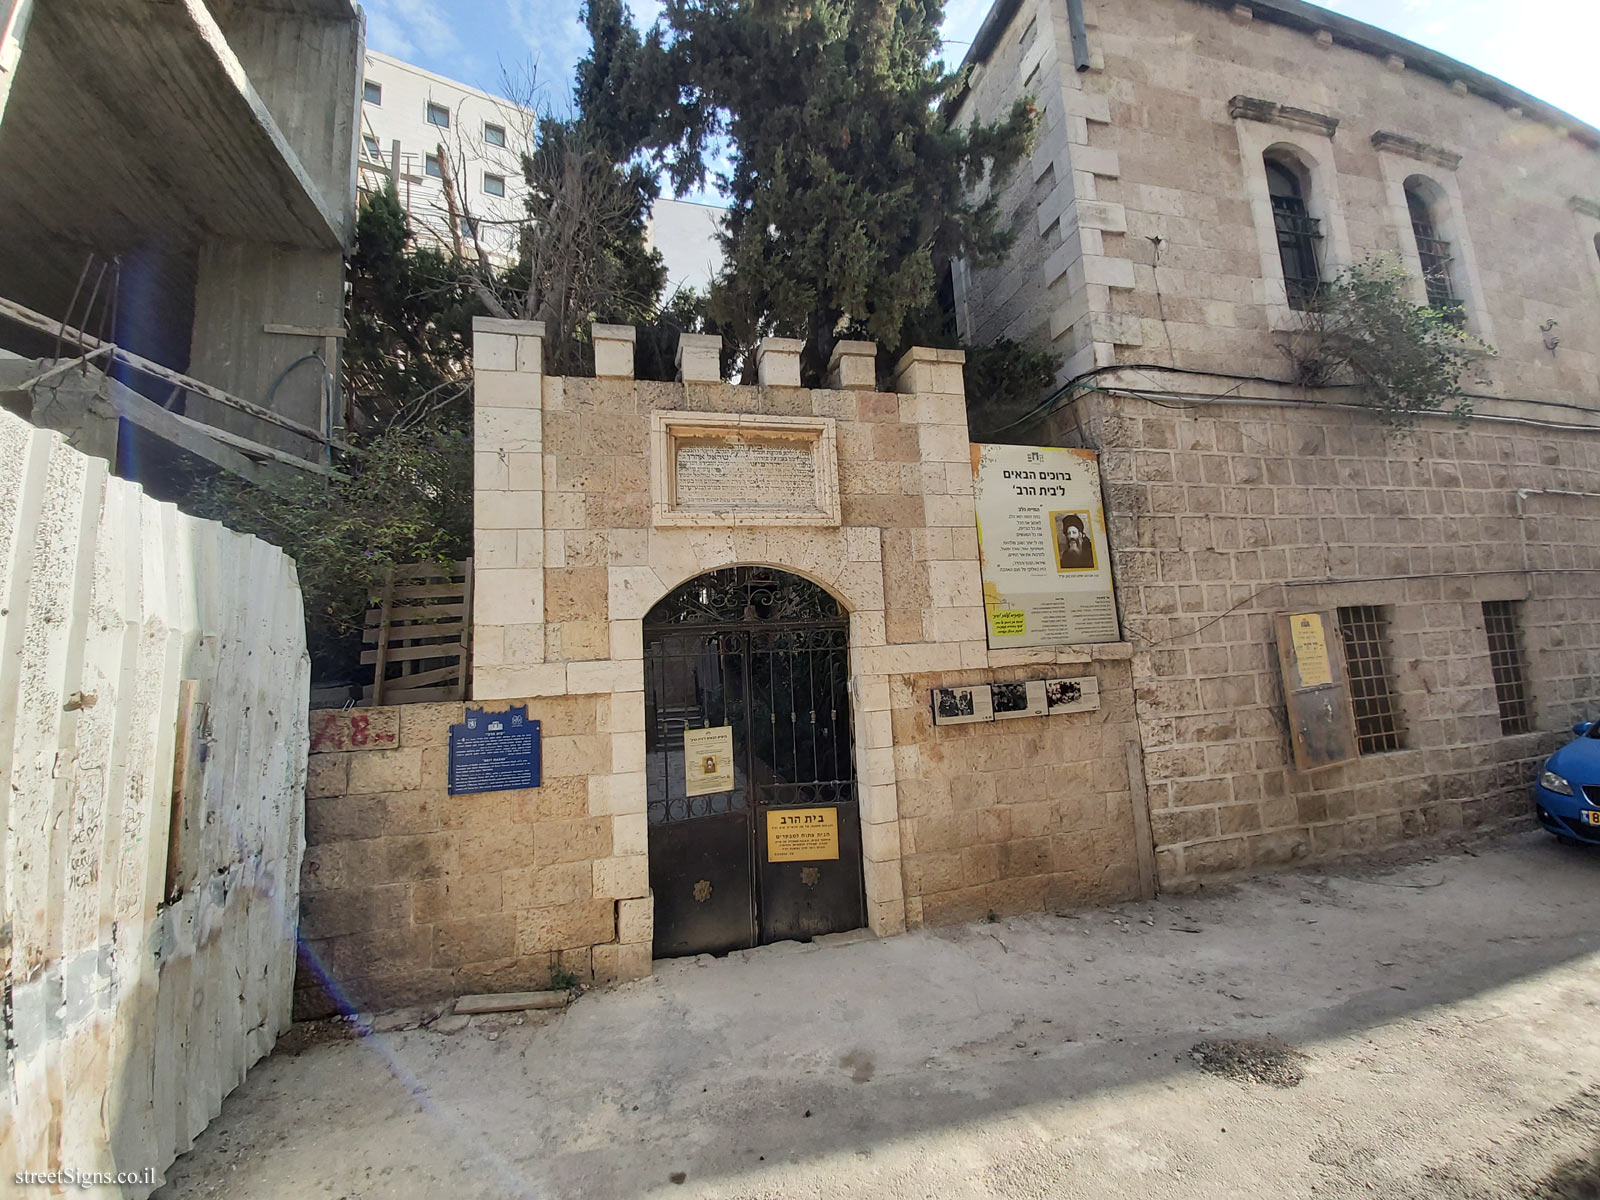 Jerusalem - Heritage Sites in Israel - "Beit Harav" - HaRav Kuk St 9, Jerusalem, Israel